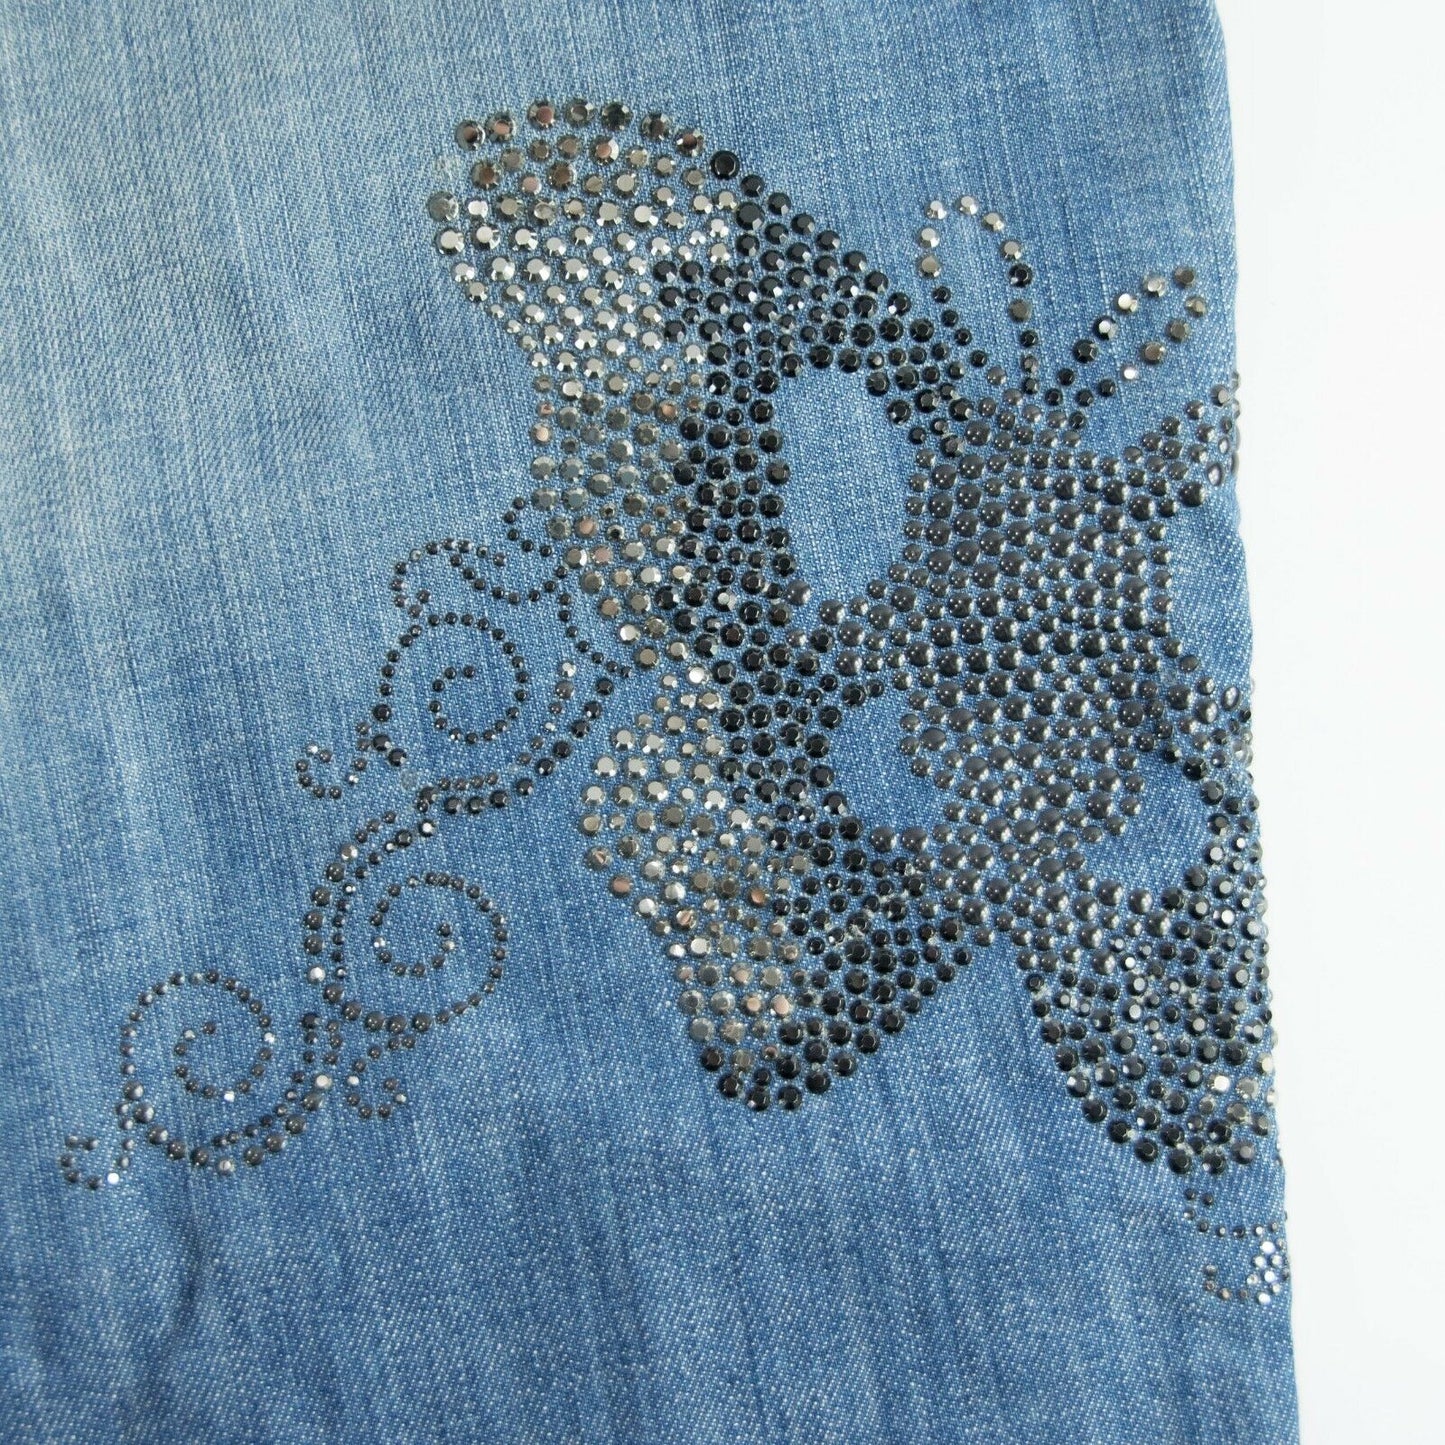 Antik Batik Crystal Rhinestone Butterfly Embellished Flare Denim Jeans 31